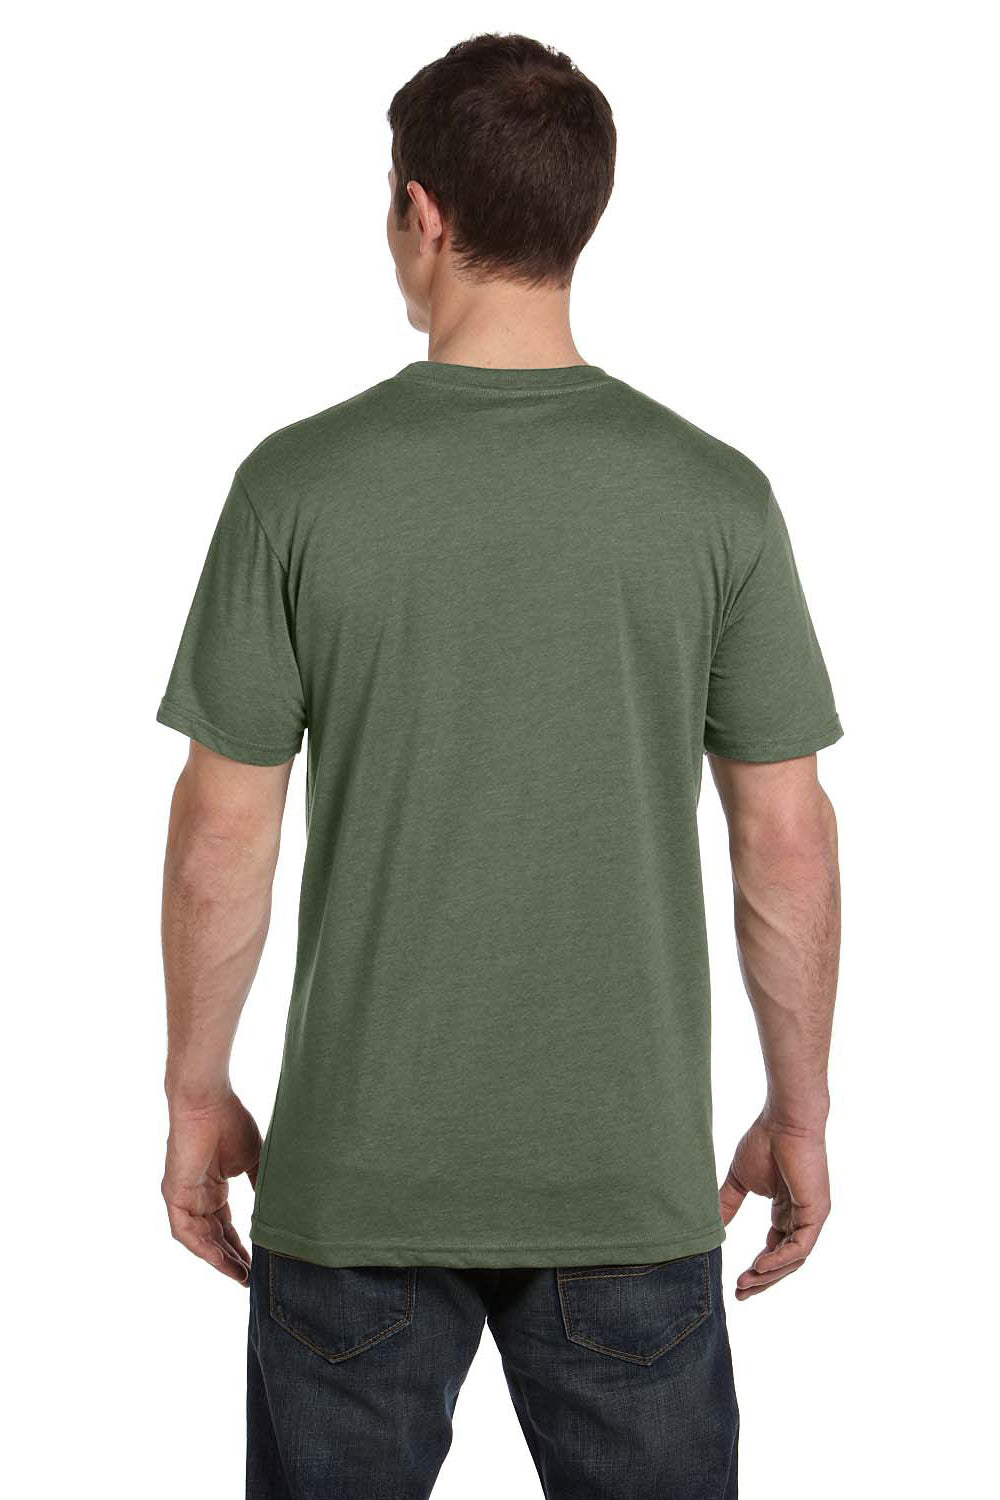 Econscious EC1080 Mens Short Sleeve Crewneck T-Shirt Asparagus Green Back